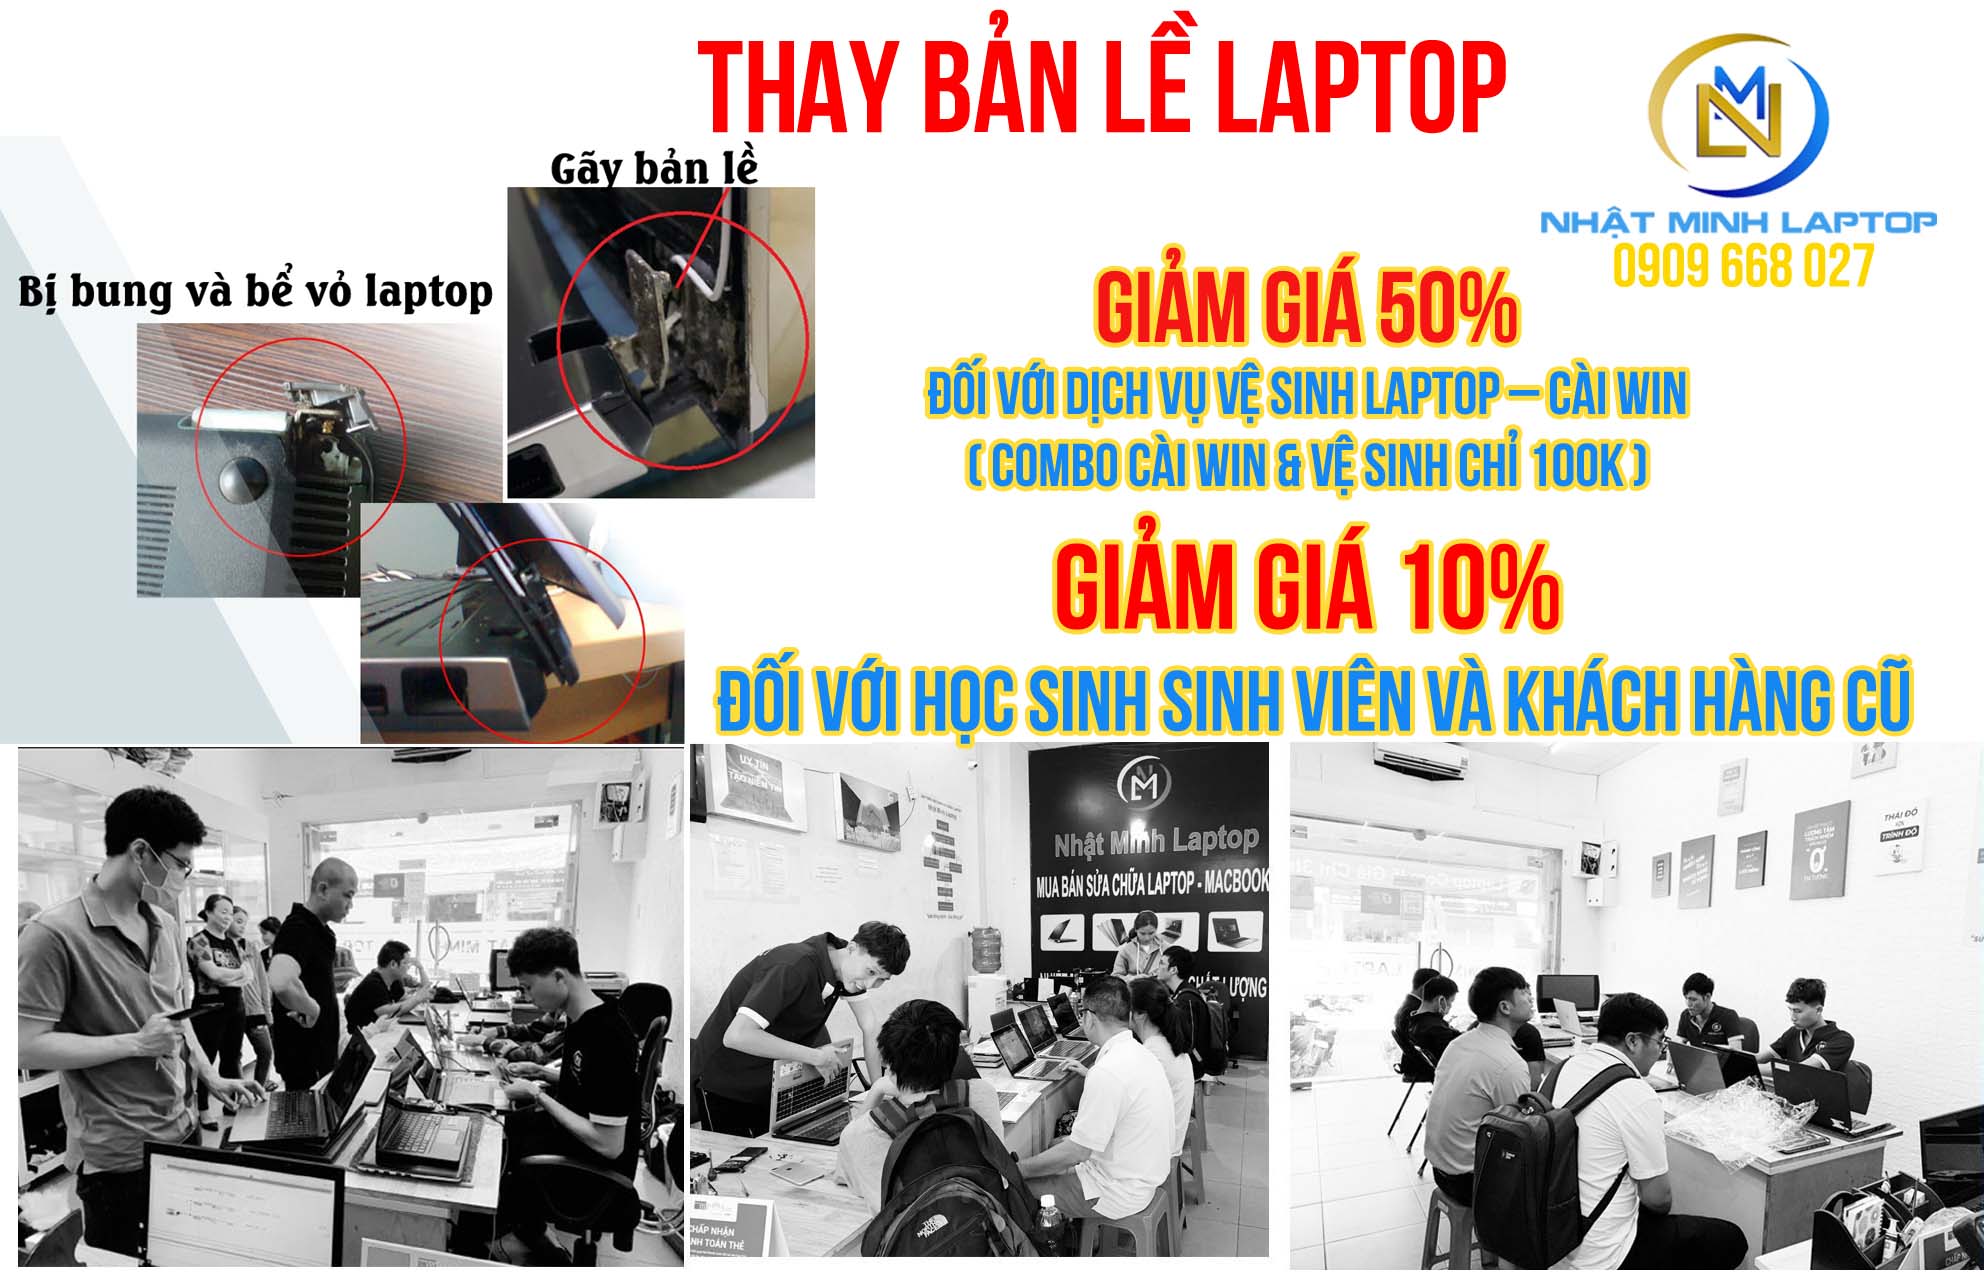 Giá thay bản lề laptop